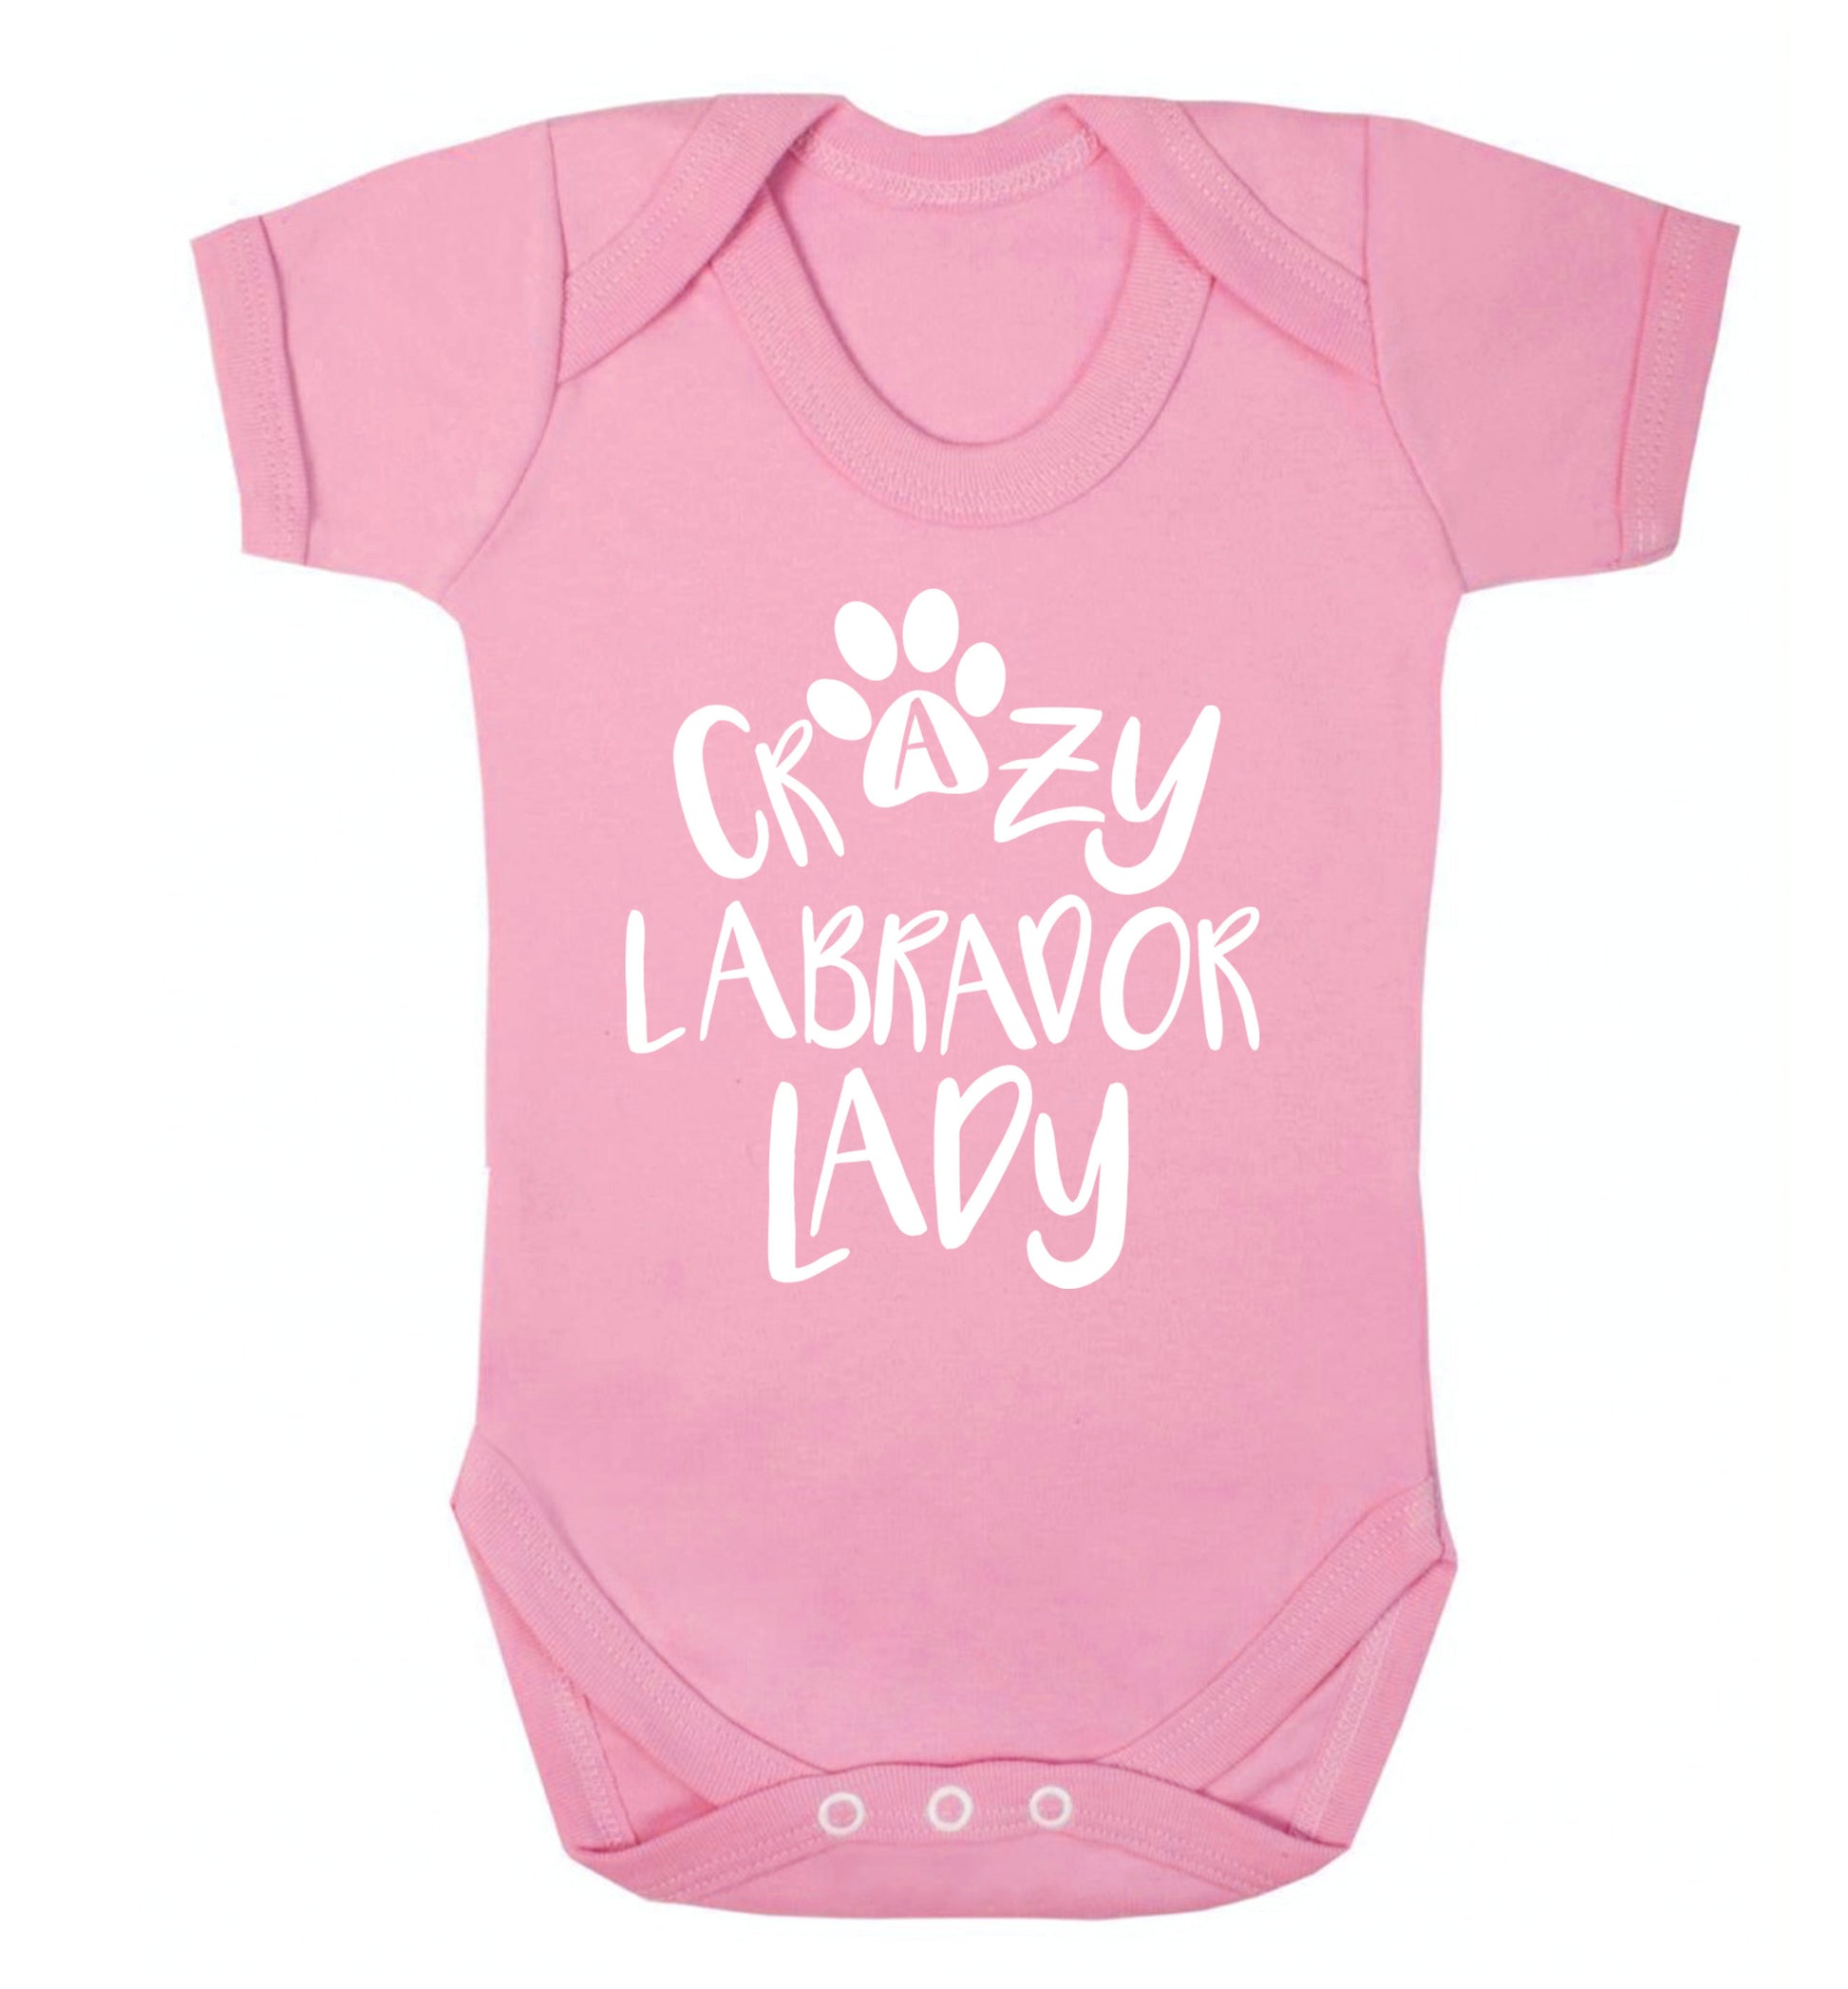 Crazy labrador lady Baby Vest pale pink 18-24 months